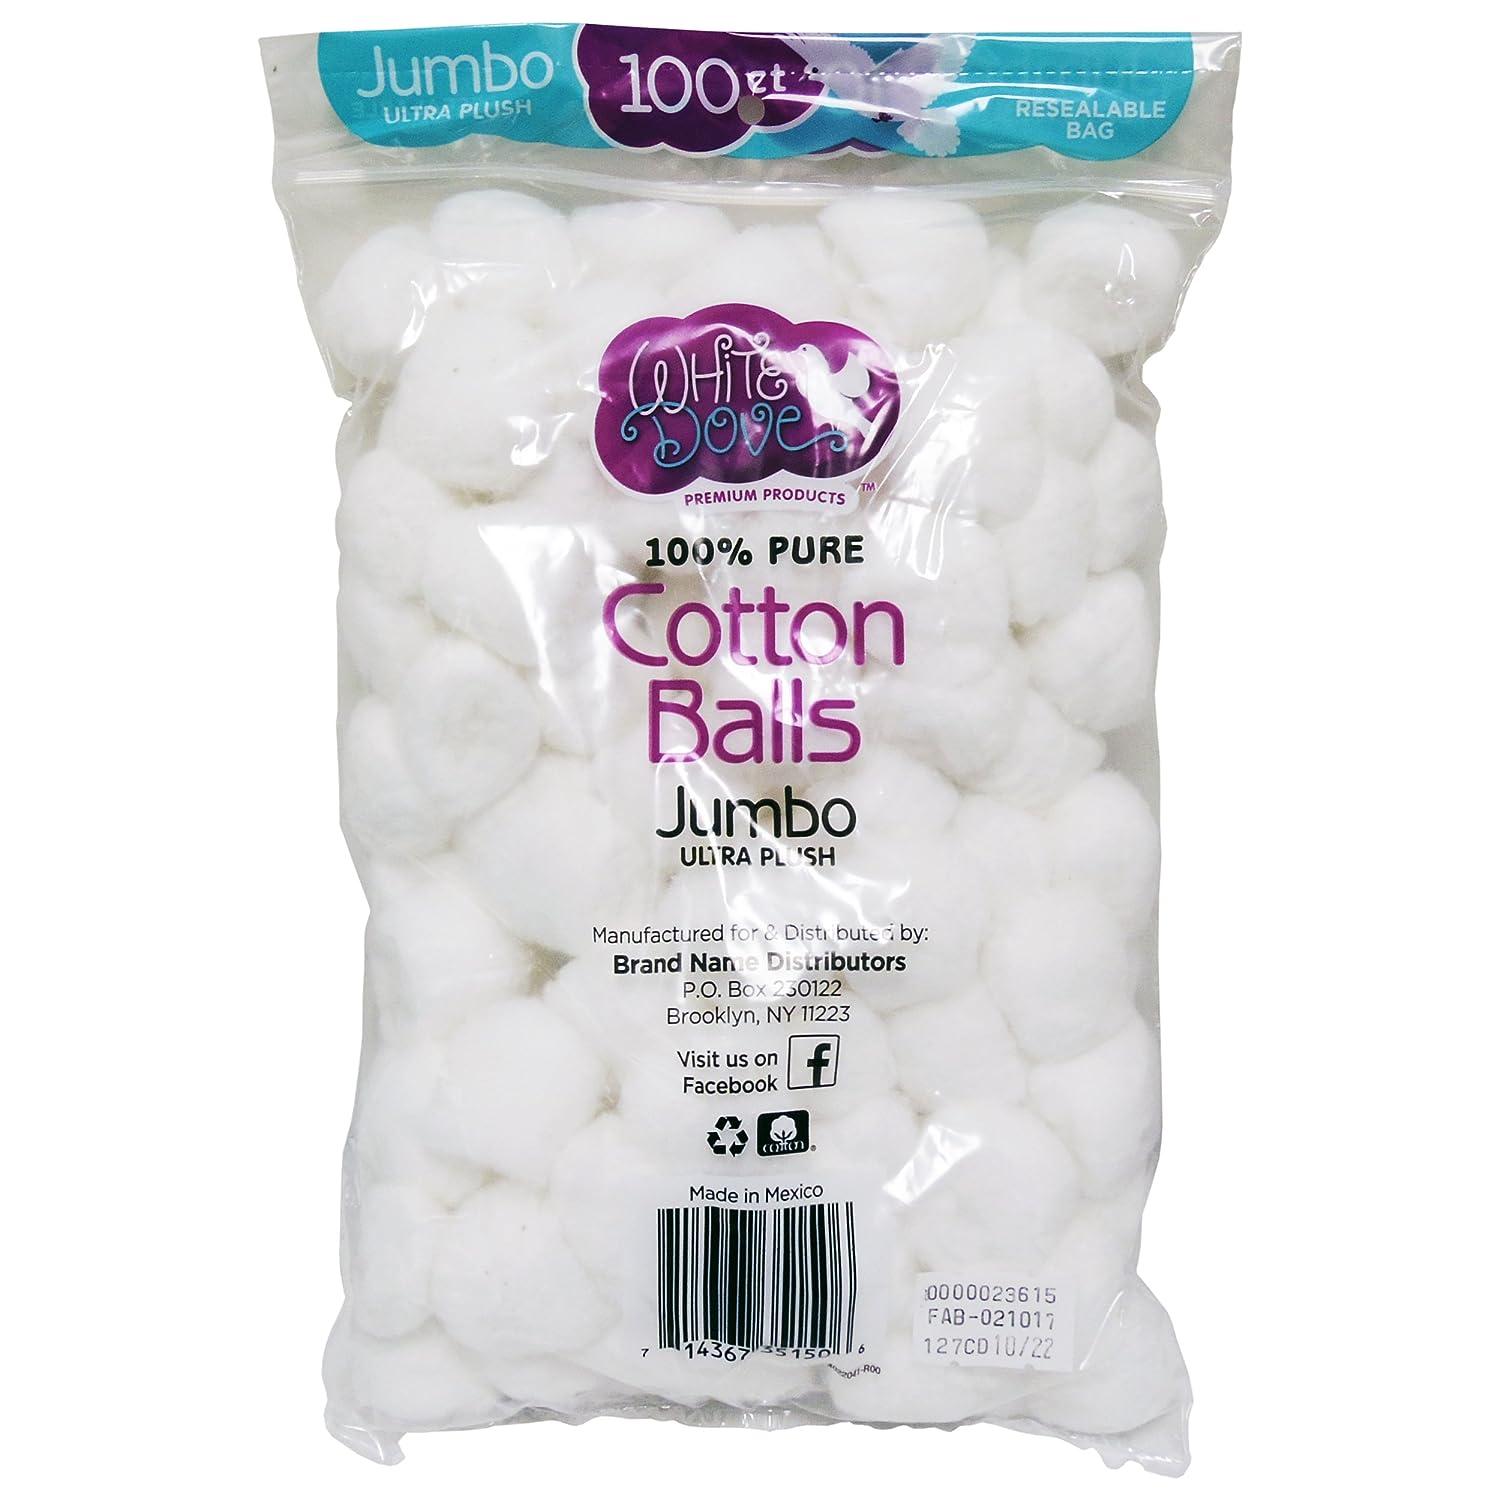 Assured Cotton Balls Jumbo Size 100% Pure Cotton - 100 Count